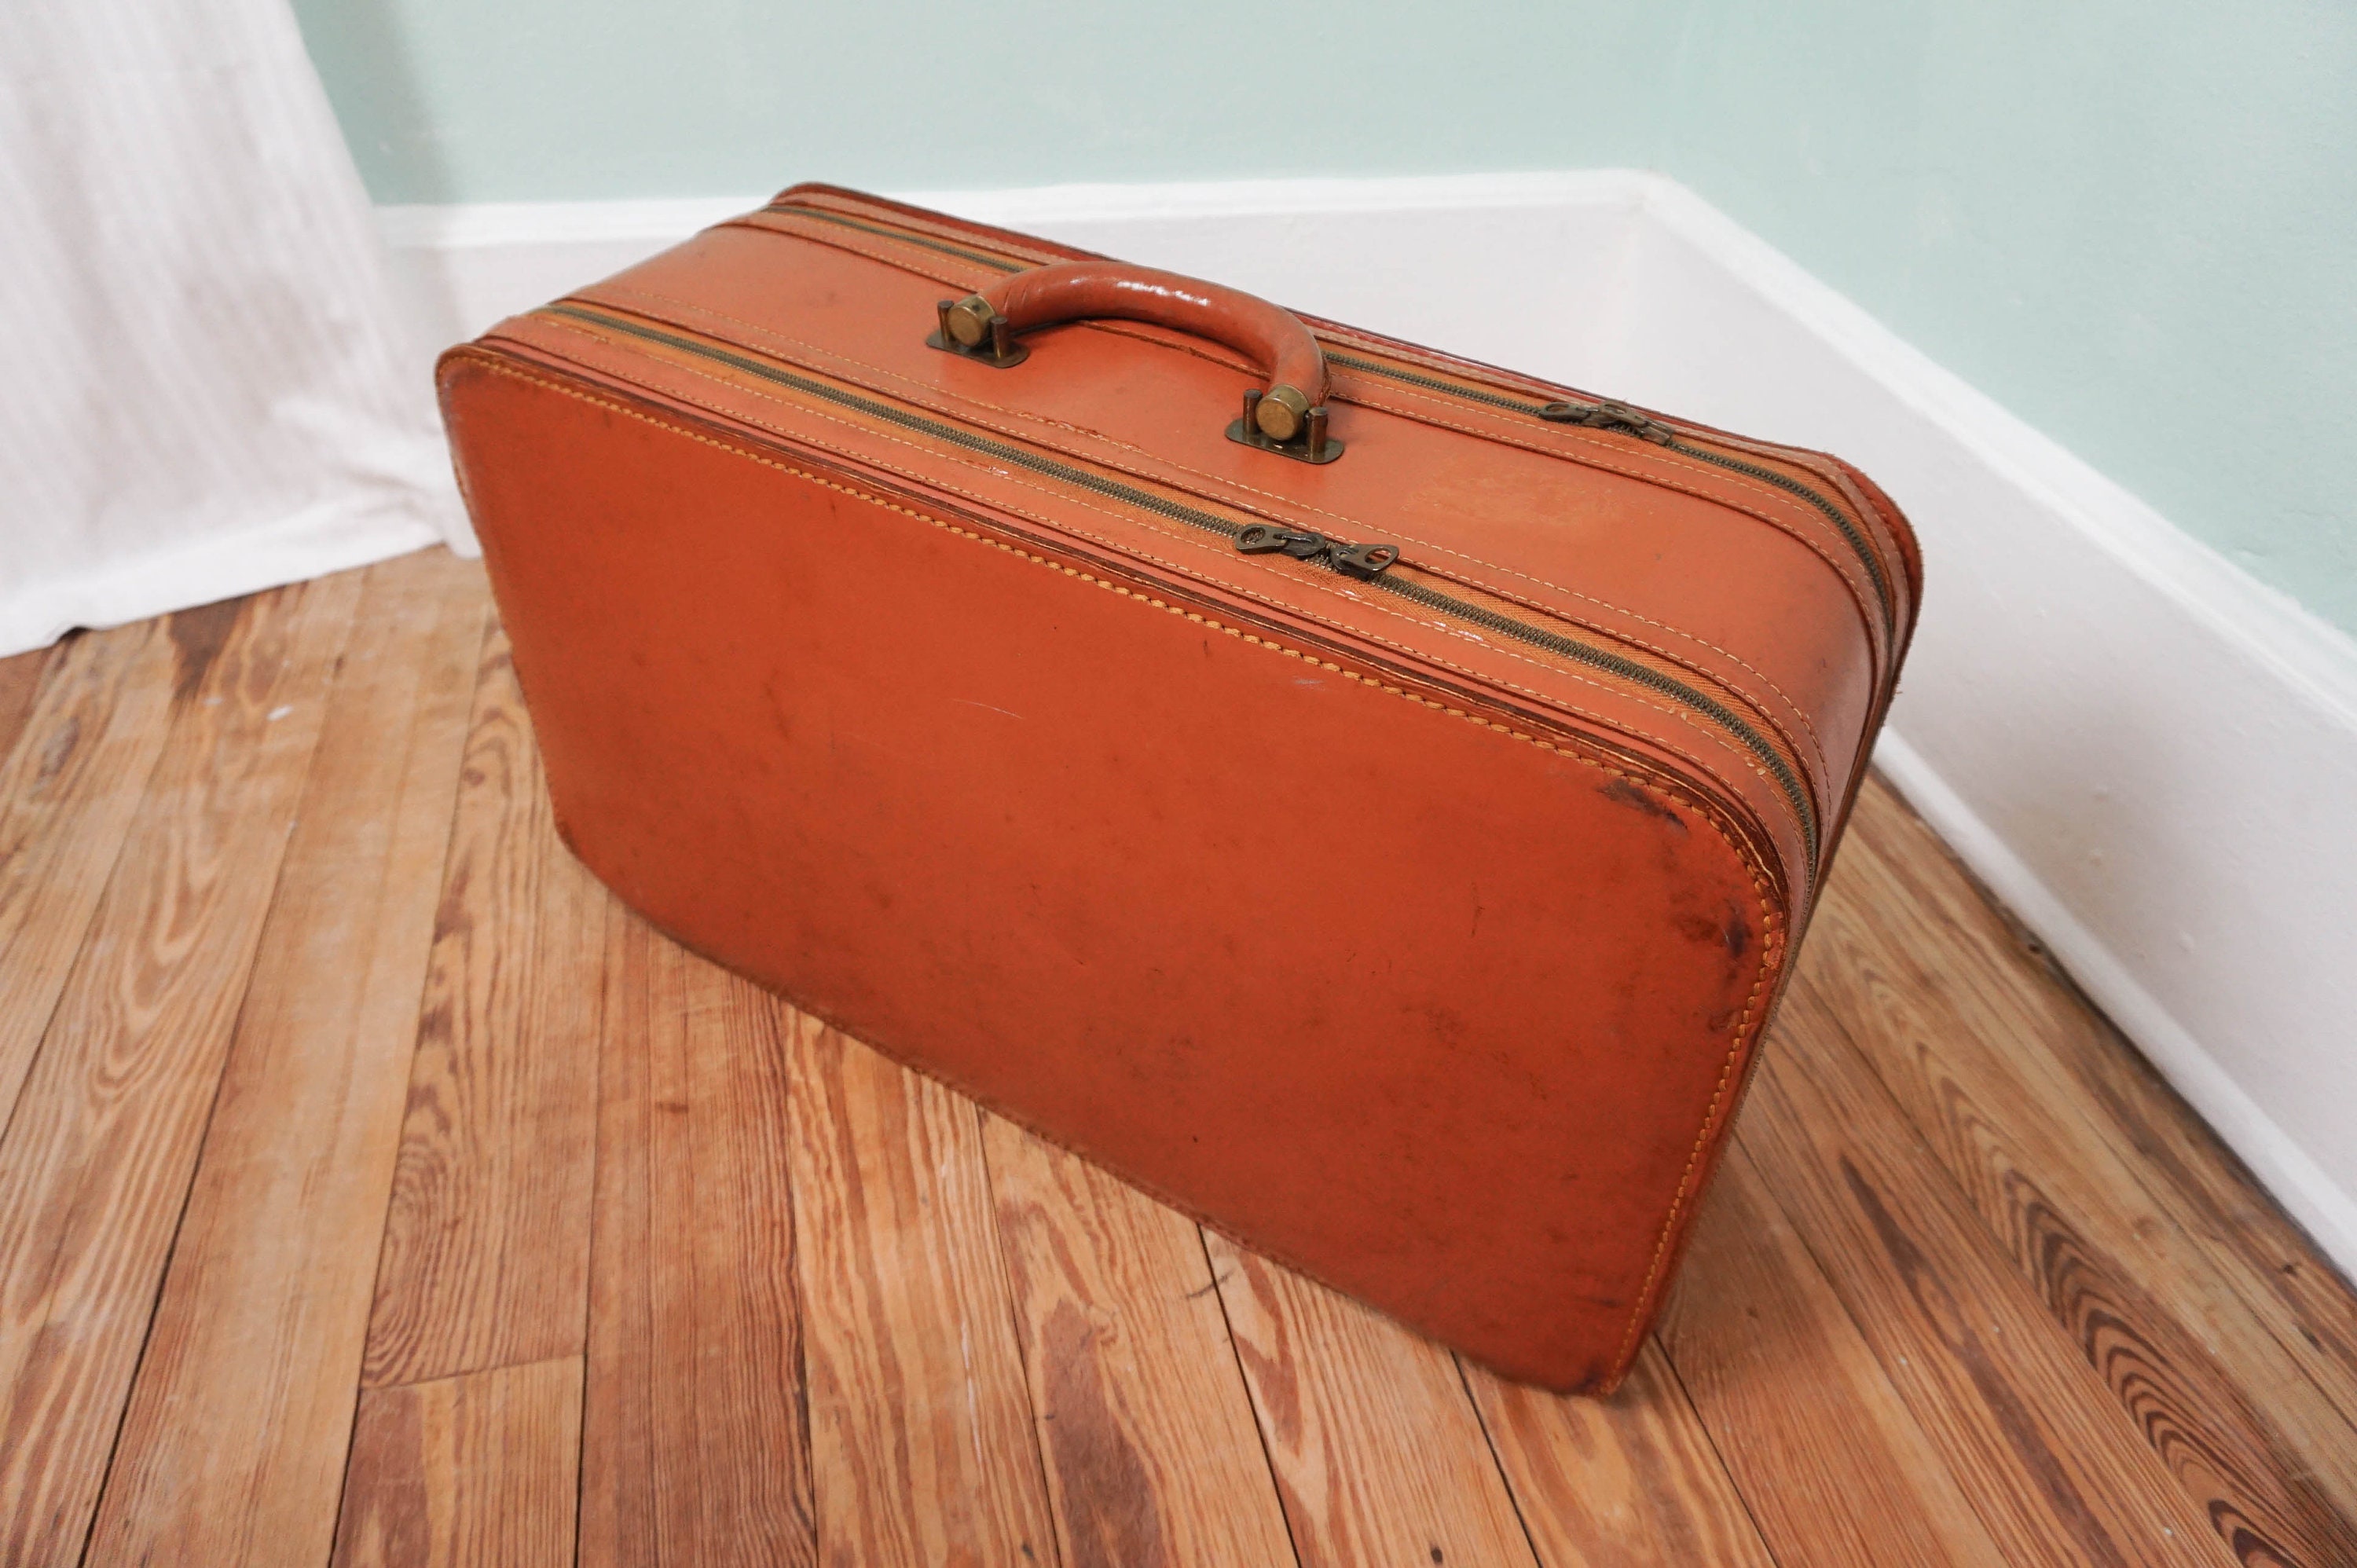 Vintage Louis Vuitton briefcase - Pinth Vintage Luggage